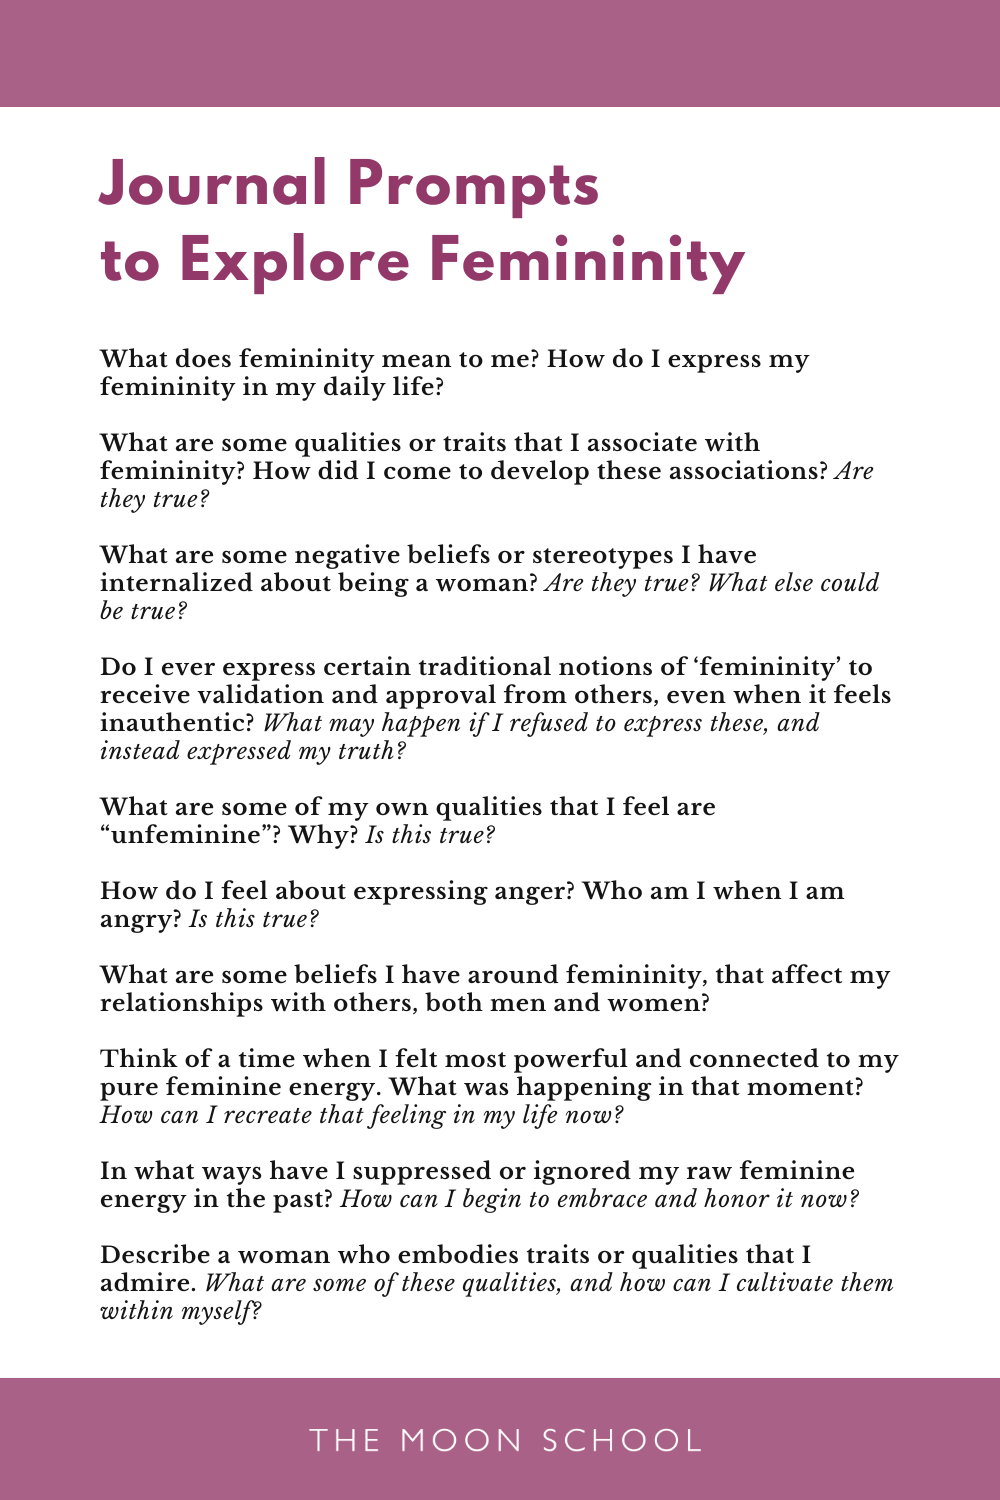 List of Journal Prompts to Explore Femininity